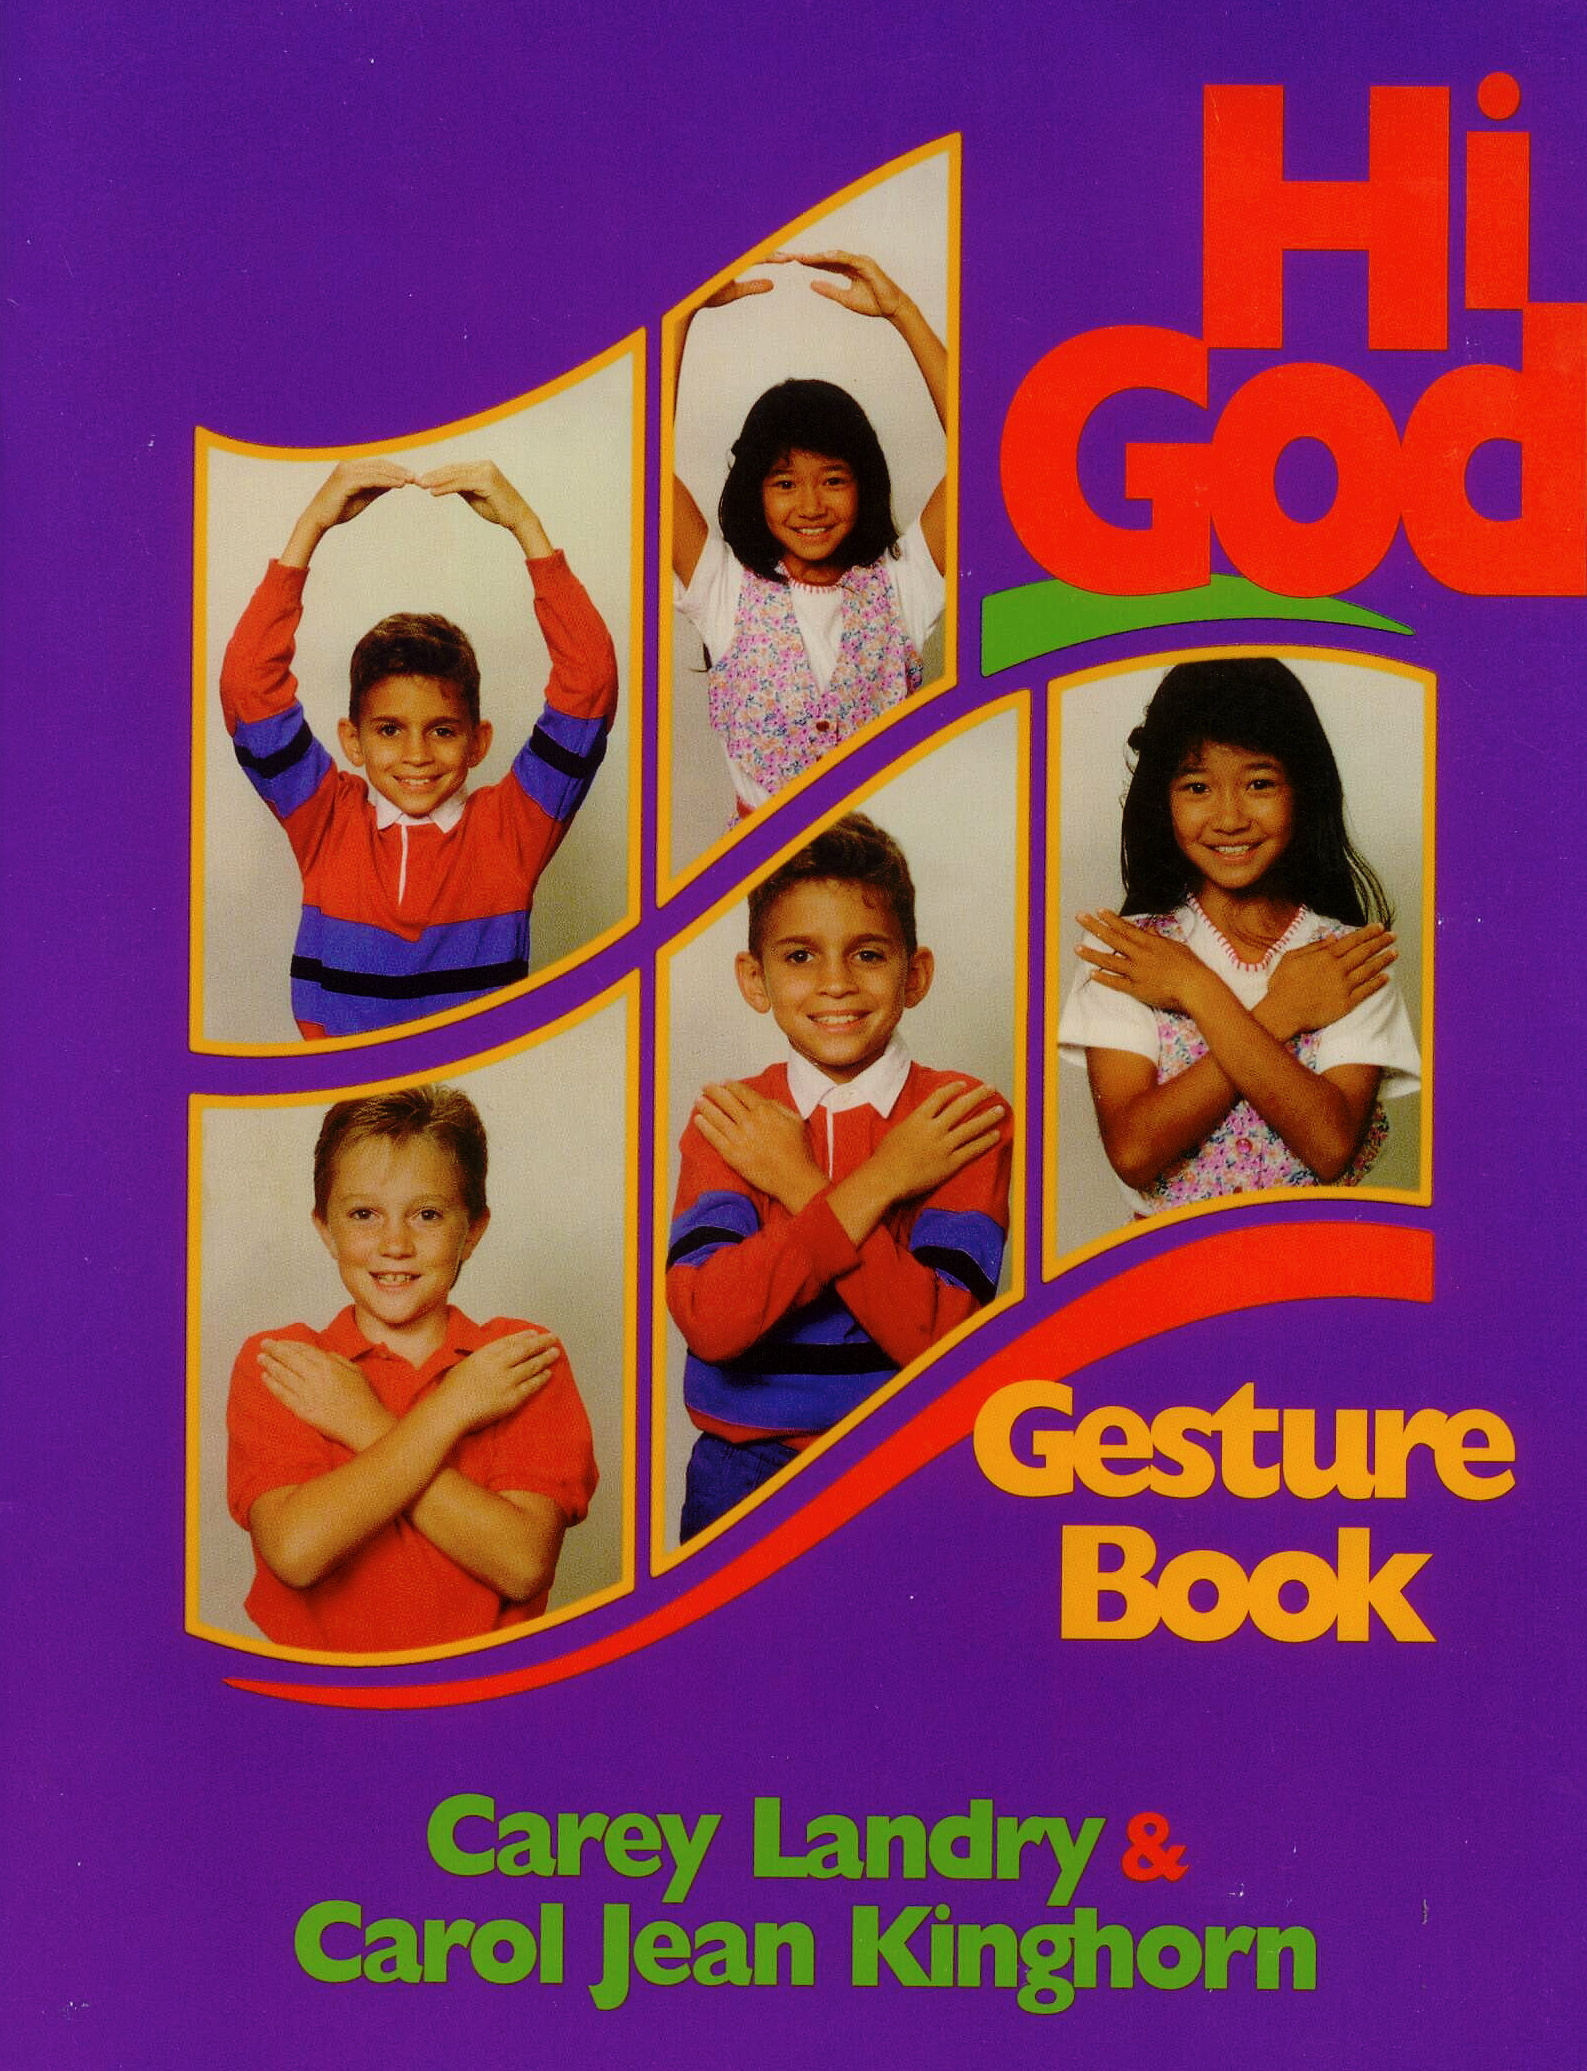 Hi God Gesture Book, Title; Carey Landry, Carol Jean Kinghorn, Authors